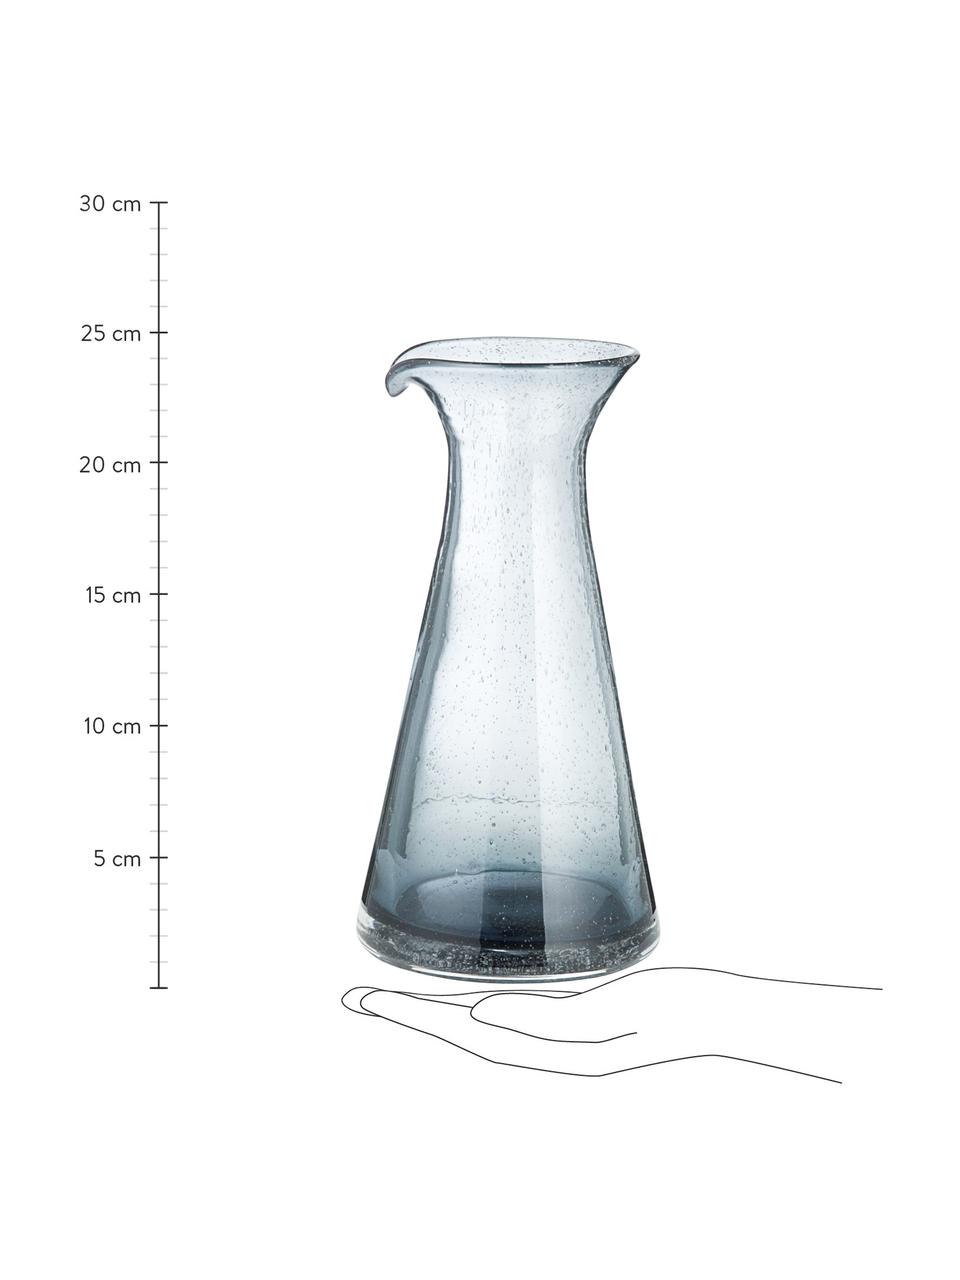 Mondgeblazen karaf Bubble met luchtbellen, 800 ml, Glas, Transparant, grijs, H 25 cm, 800 ml